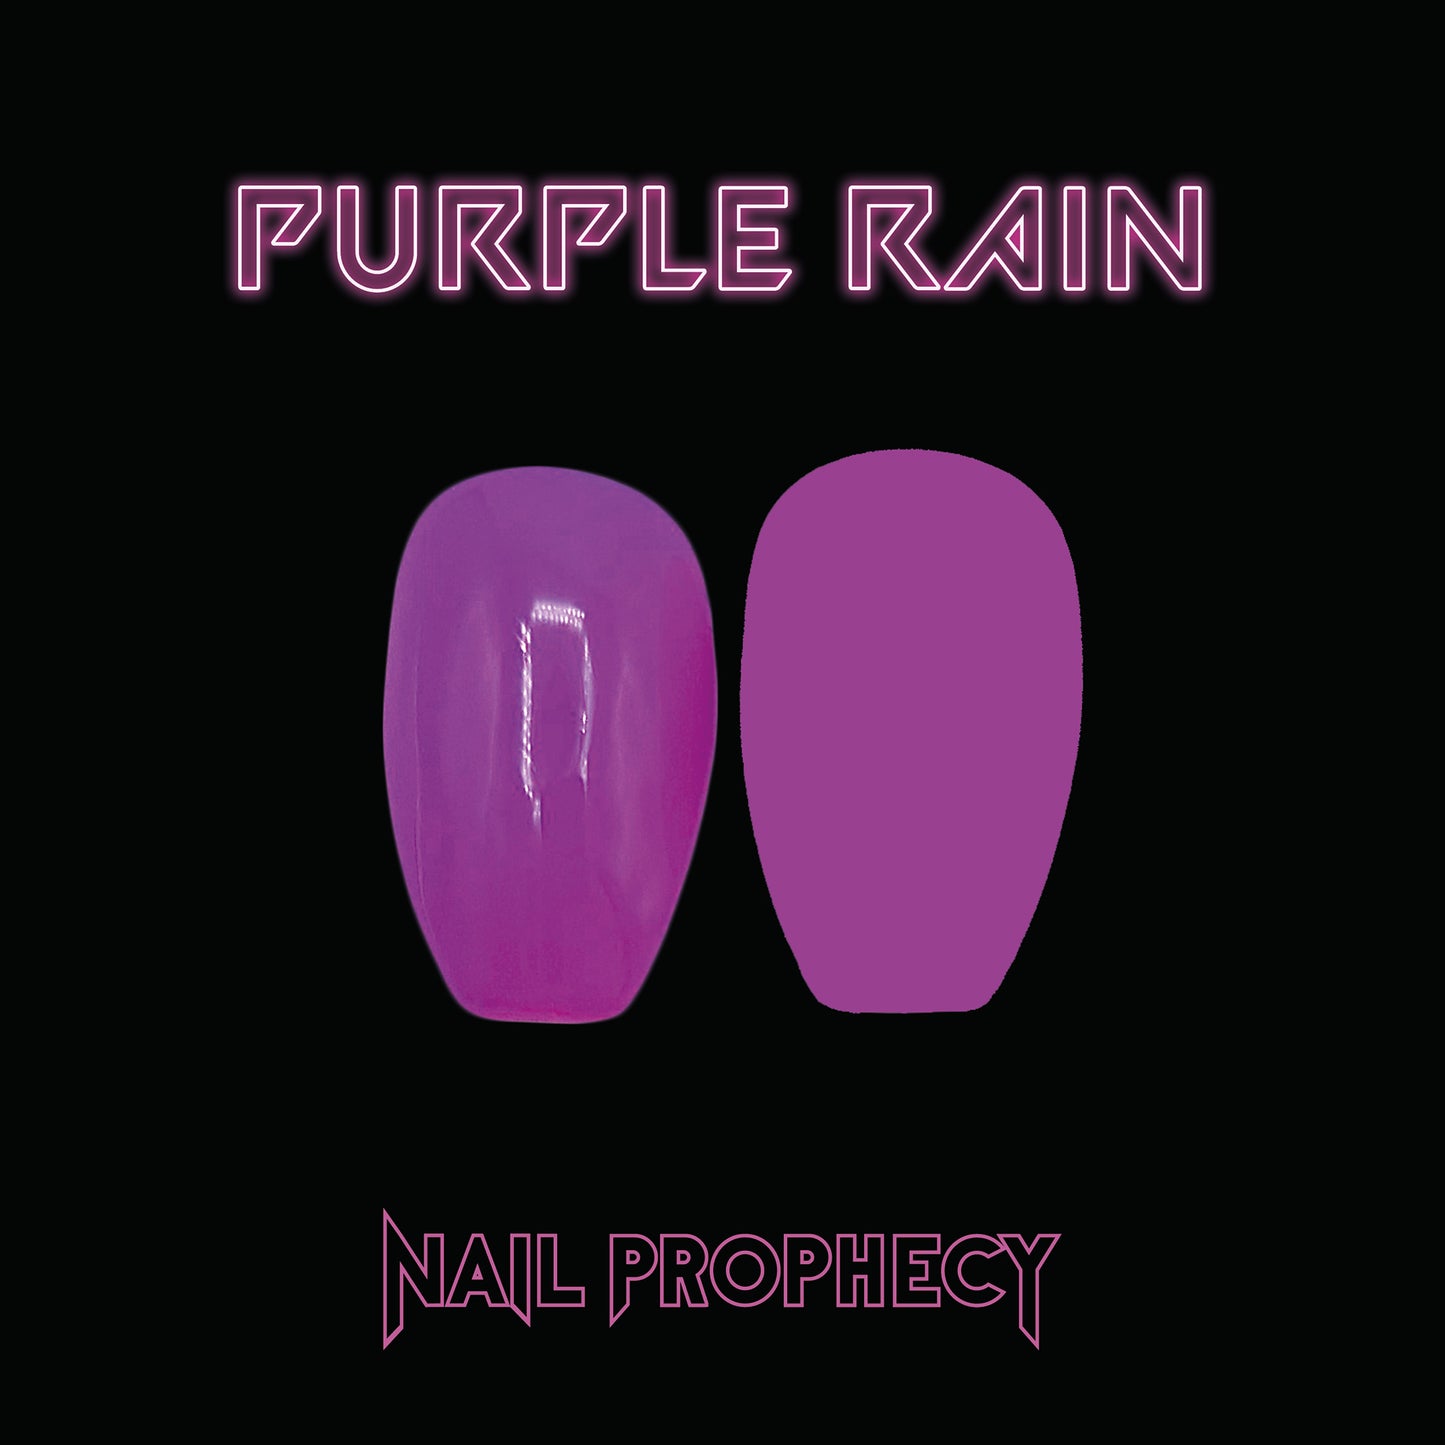 Neon Collection: Purple rain